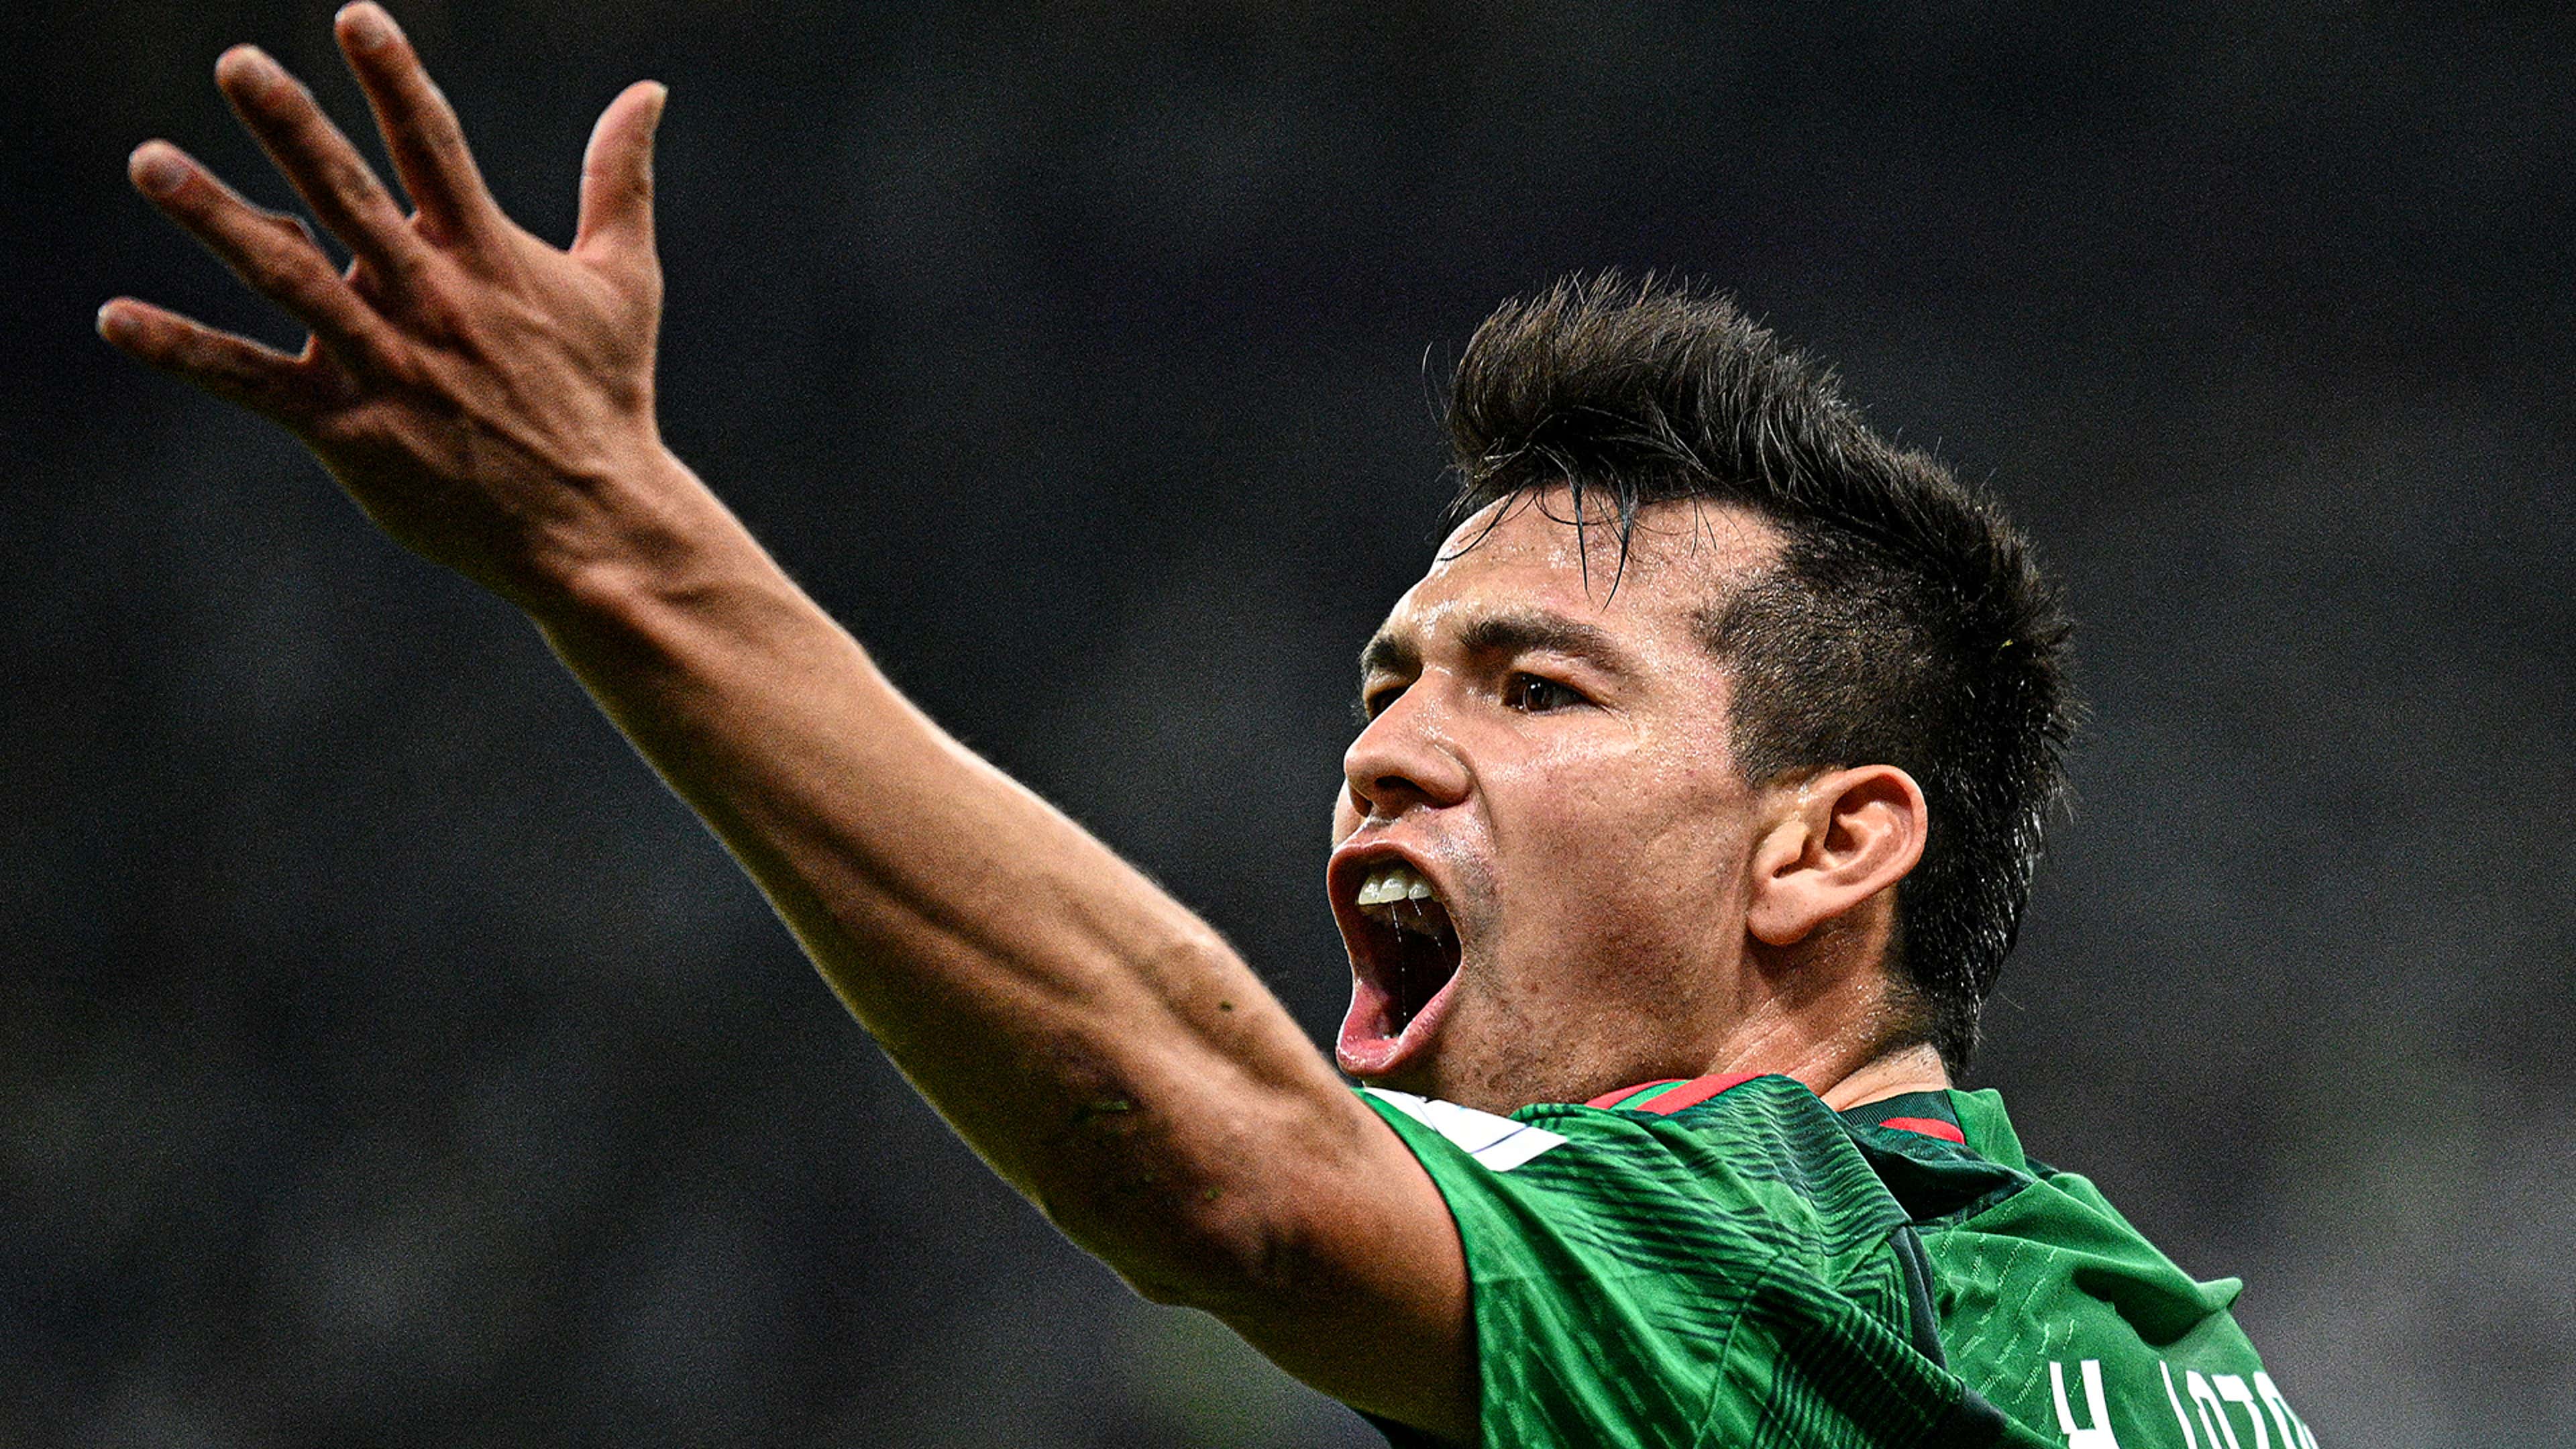 Mexico national team: Uriel Antuna hat trick shows El Tri is still